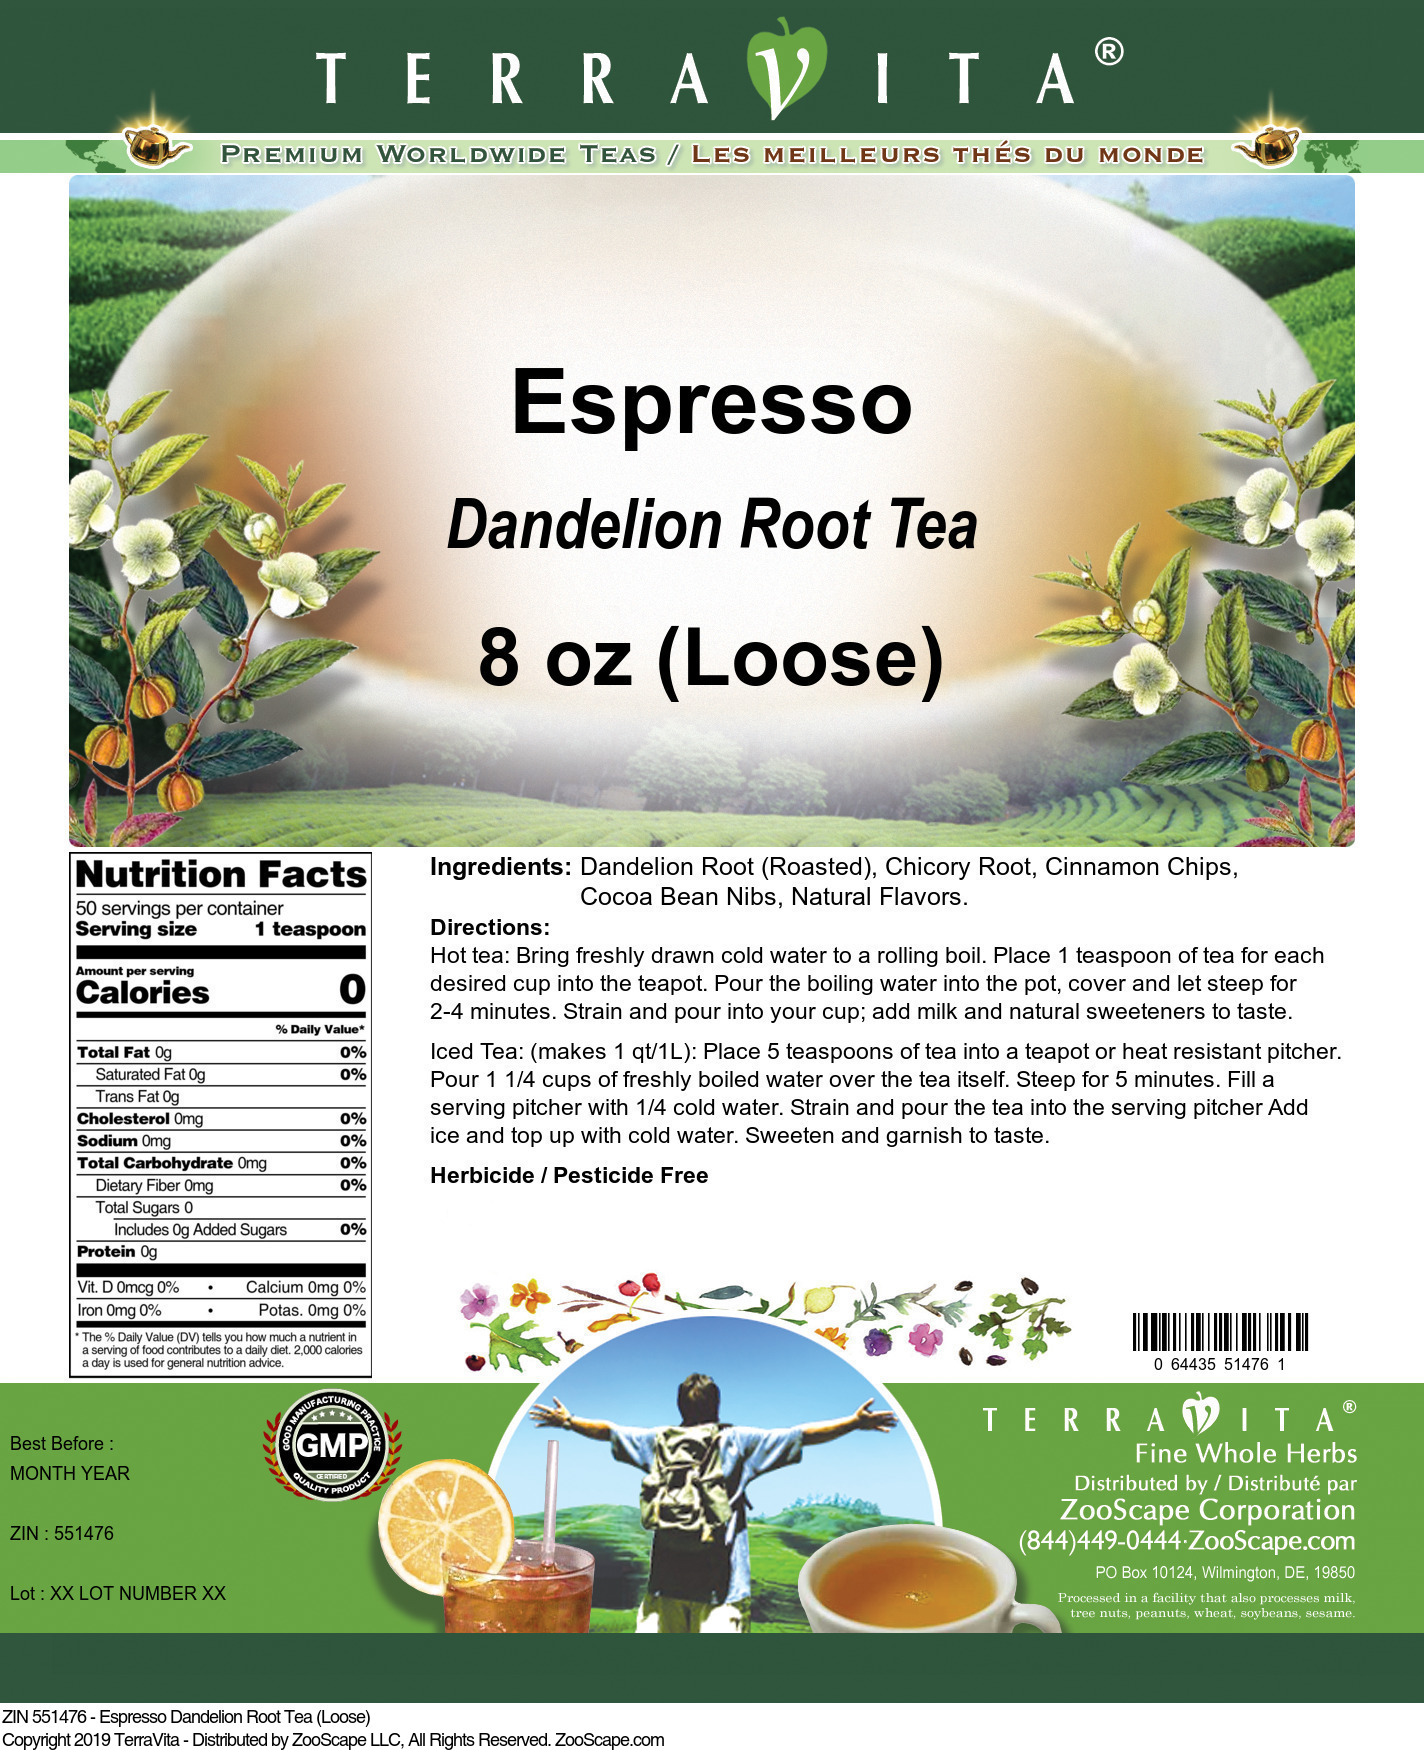 Espresso Dandelion Root Tea (Loose) - Label